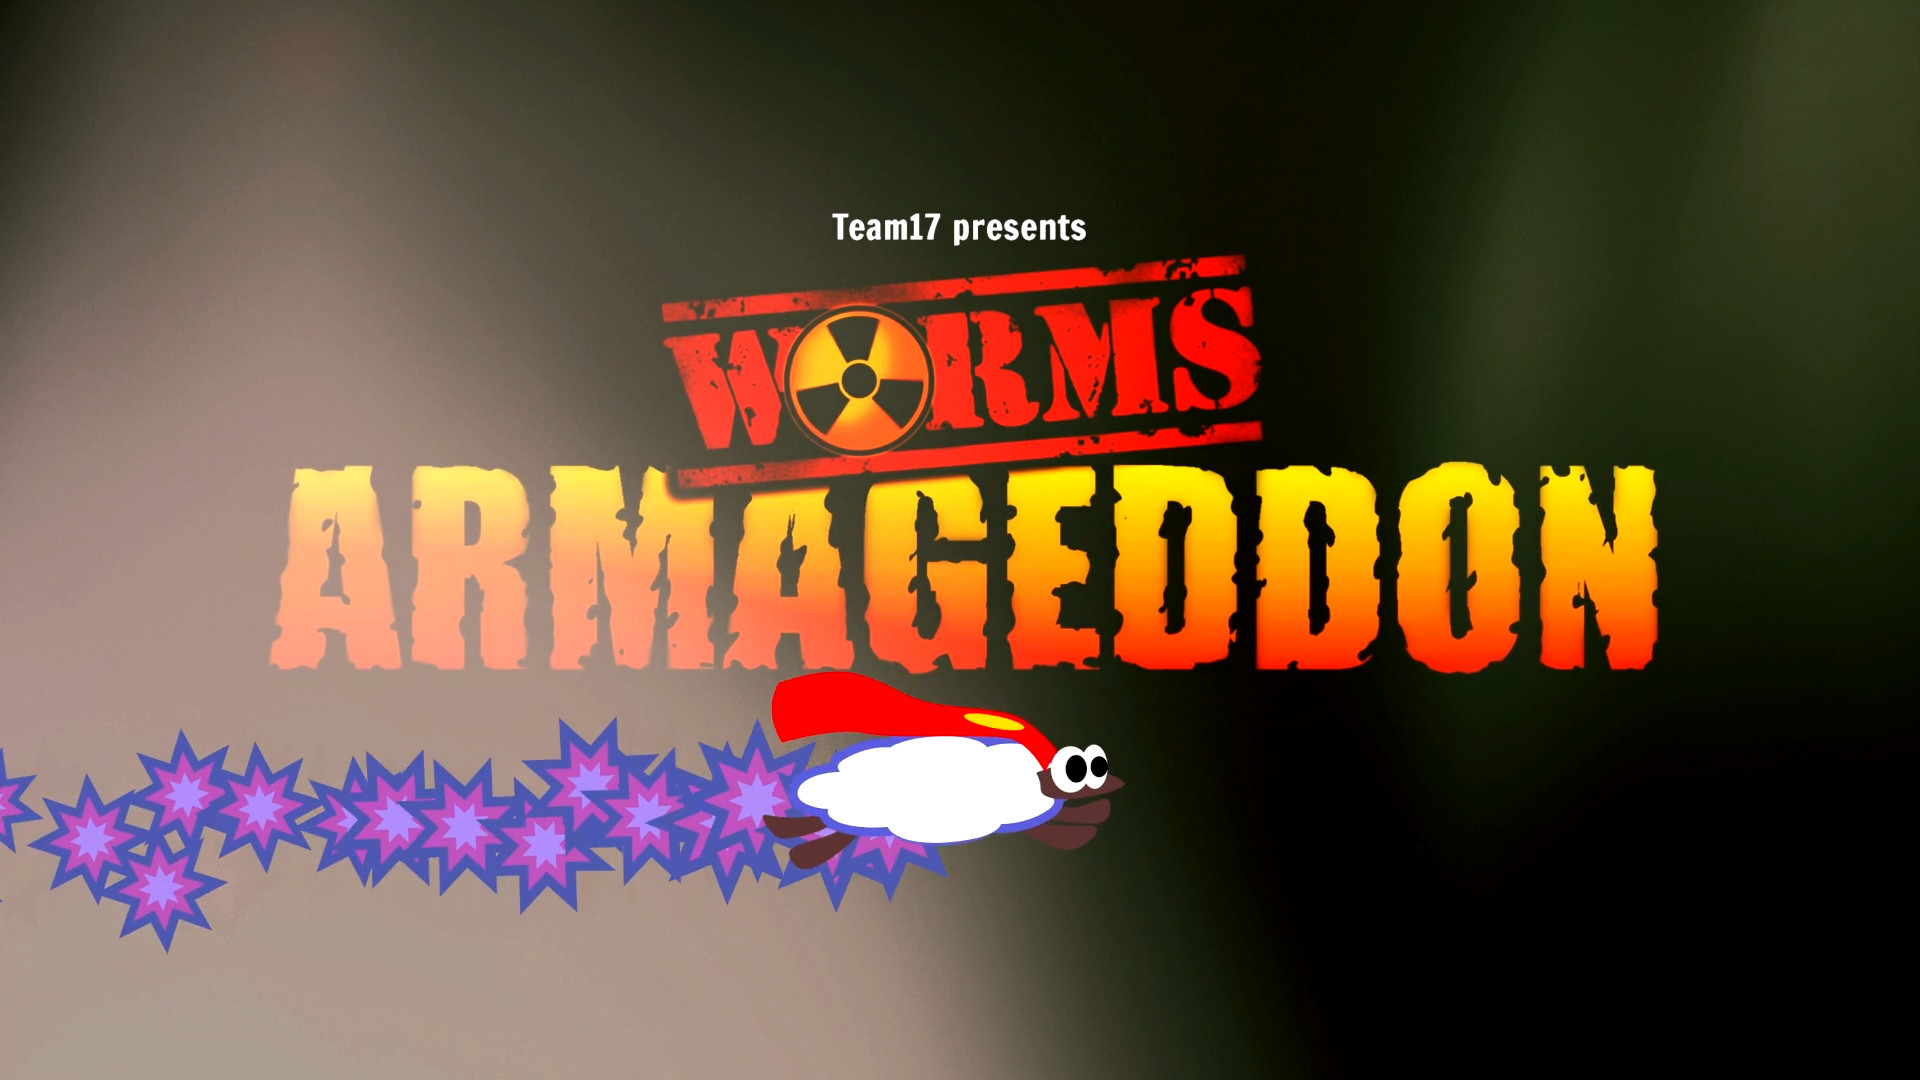 worms 2 armageddon ps4